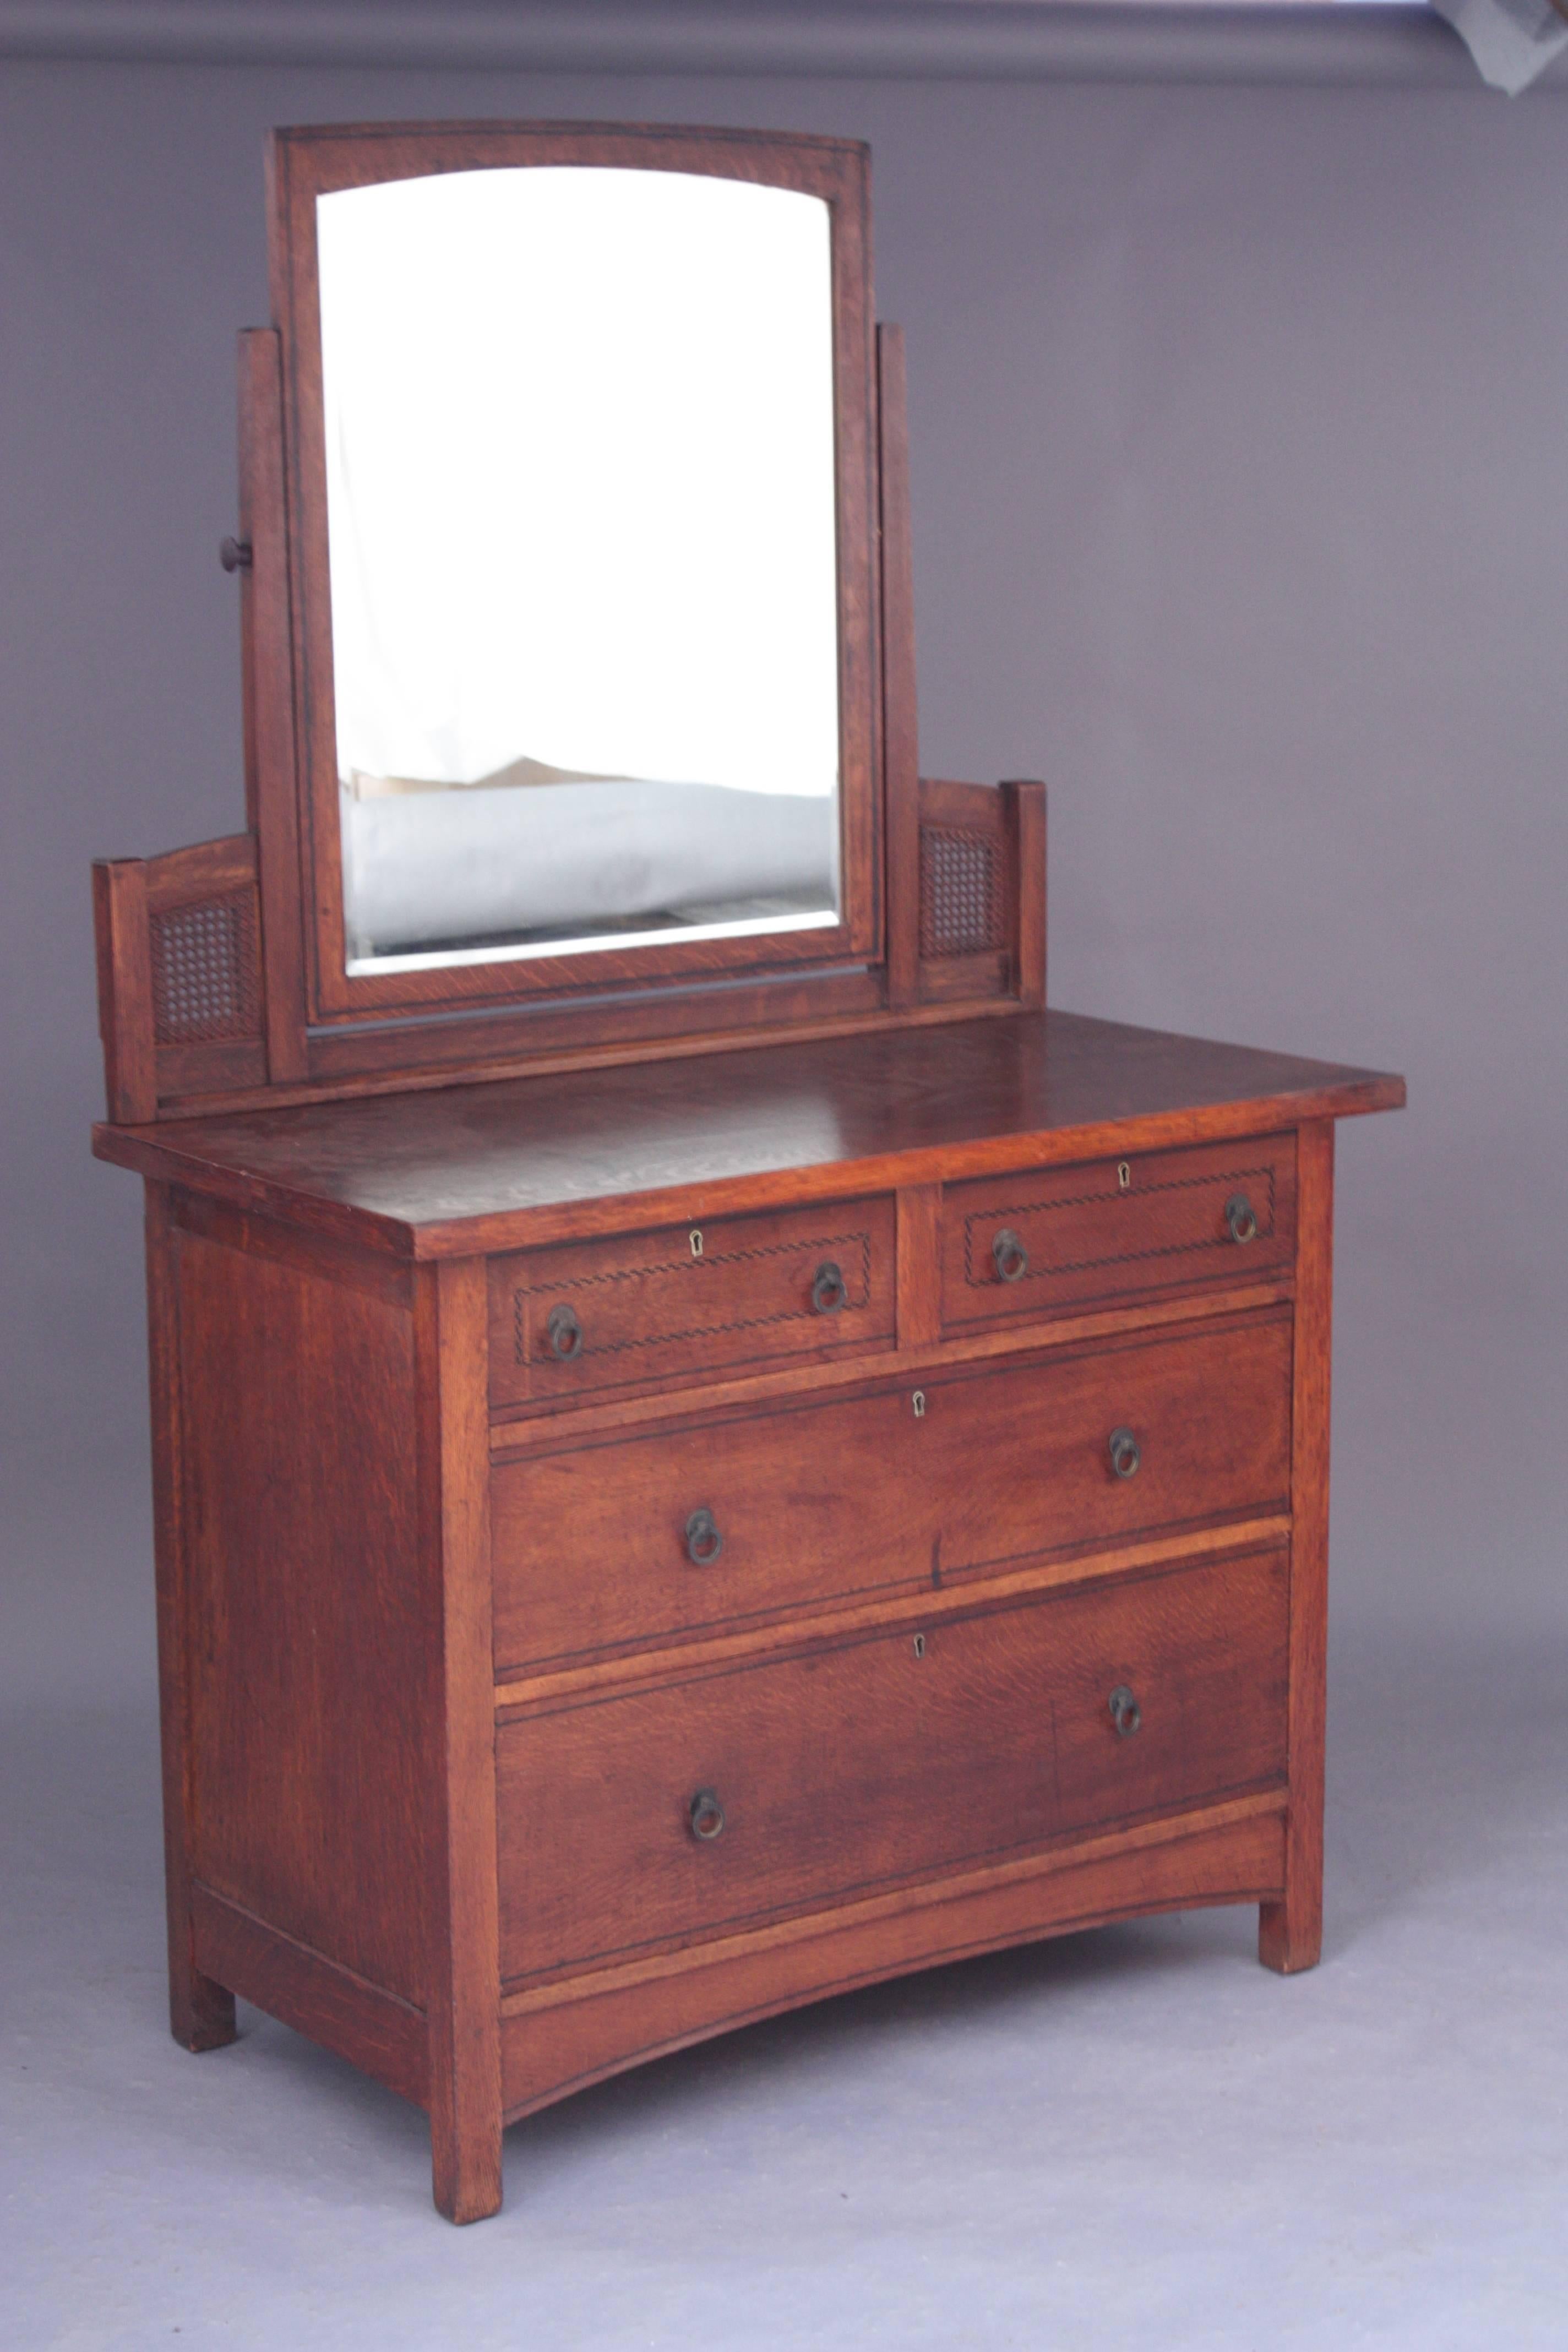 Arts And Crafts Dresser With Mirror
Circa 1910 Arts And Crafts oak dresser with original mirror. Arched apron.